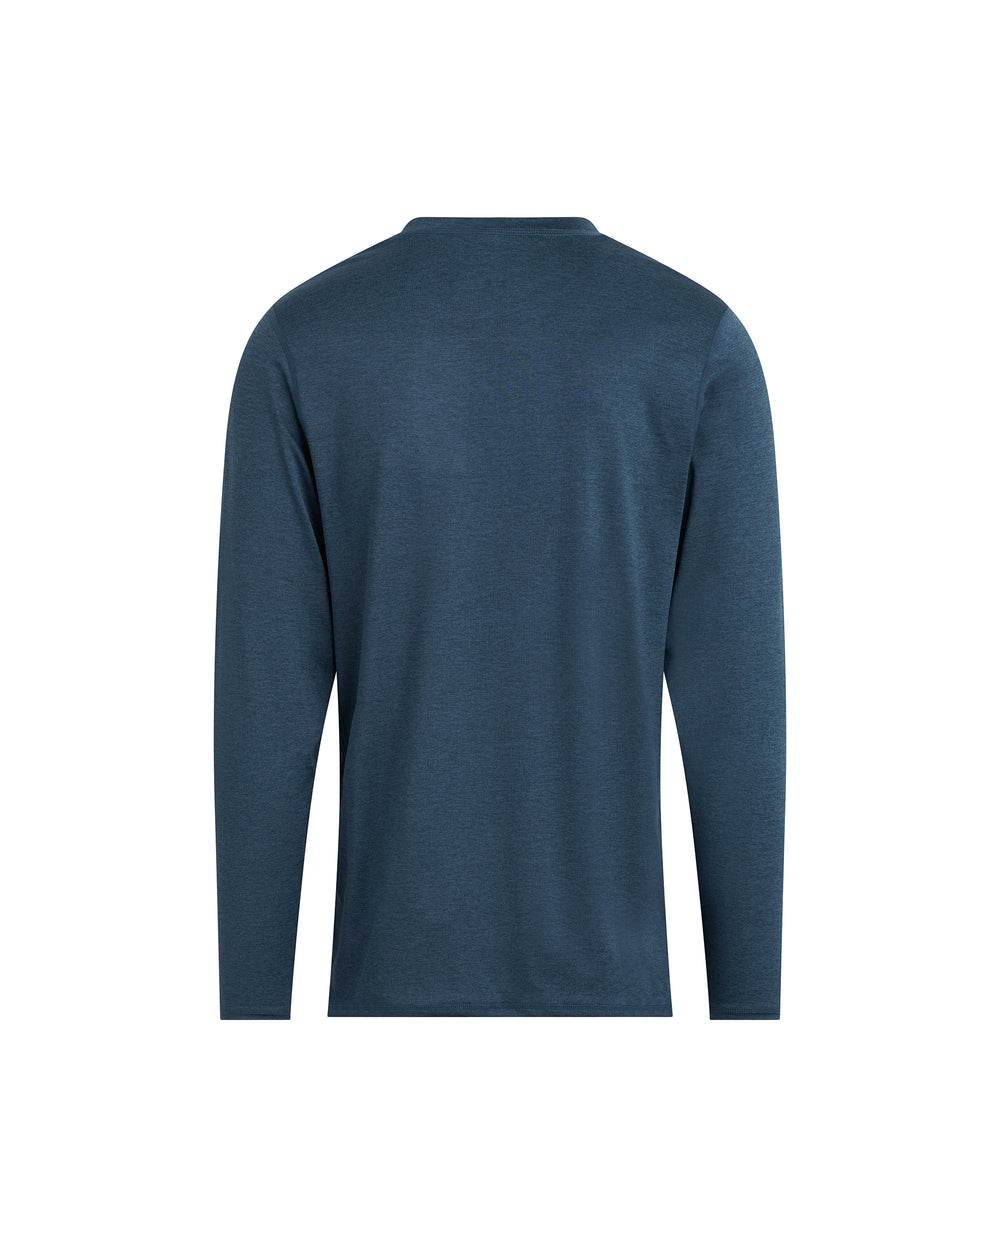 Lucky Brand Navy Blue Split Neck Thermal Long Sleeve Lace Shirt Size Medium